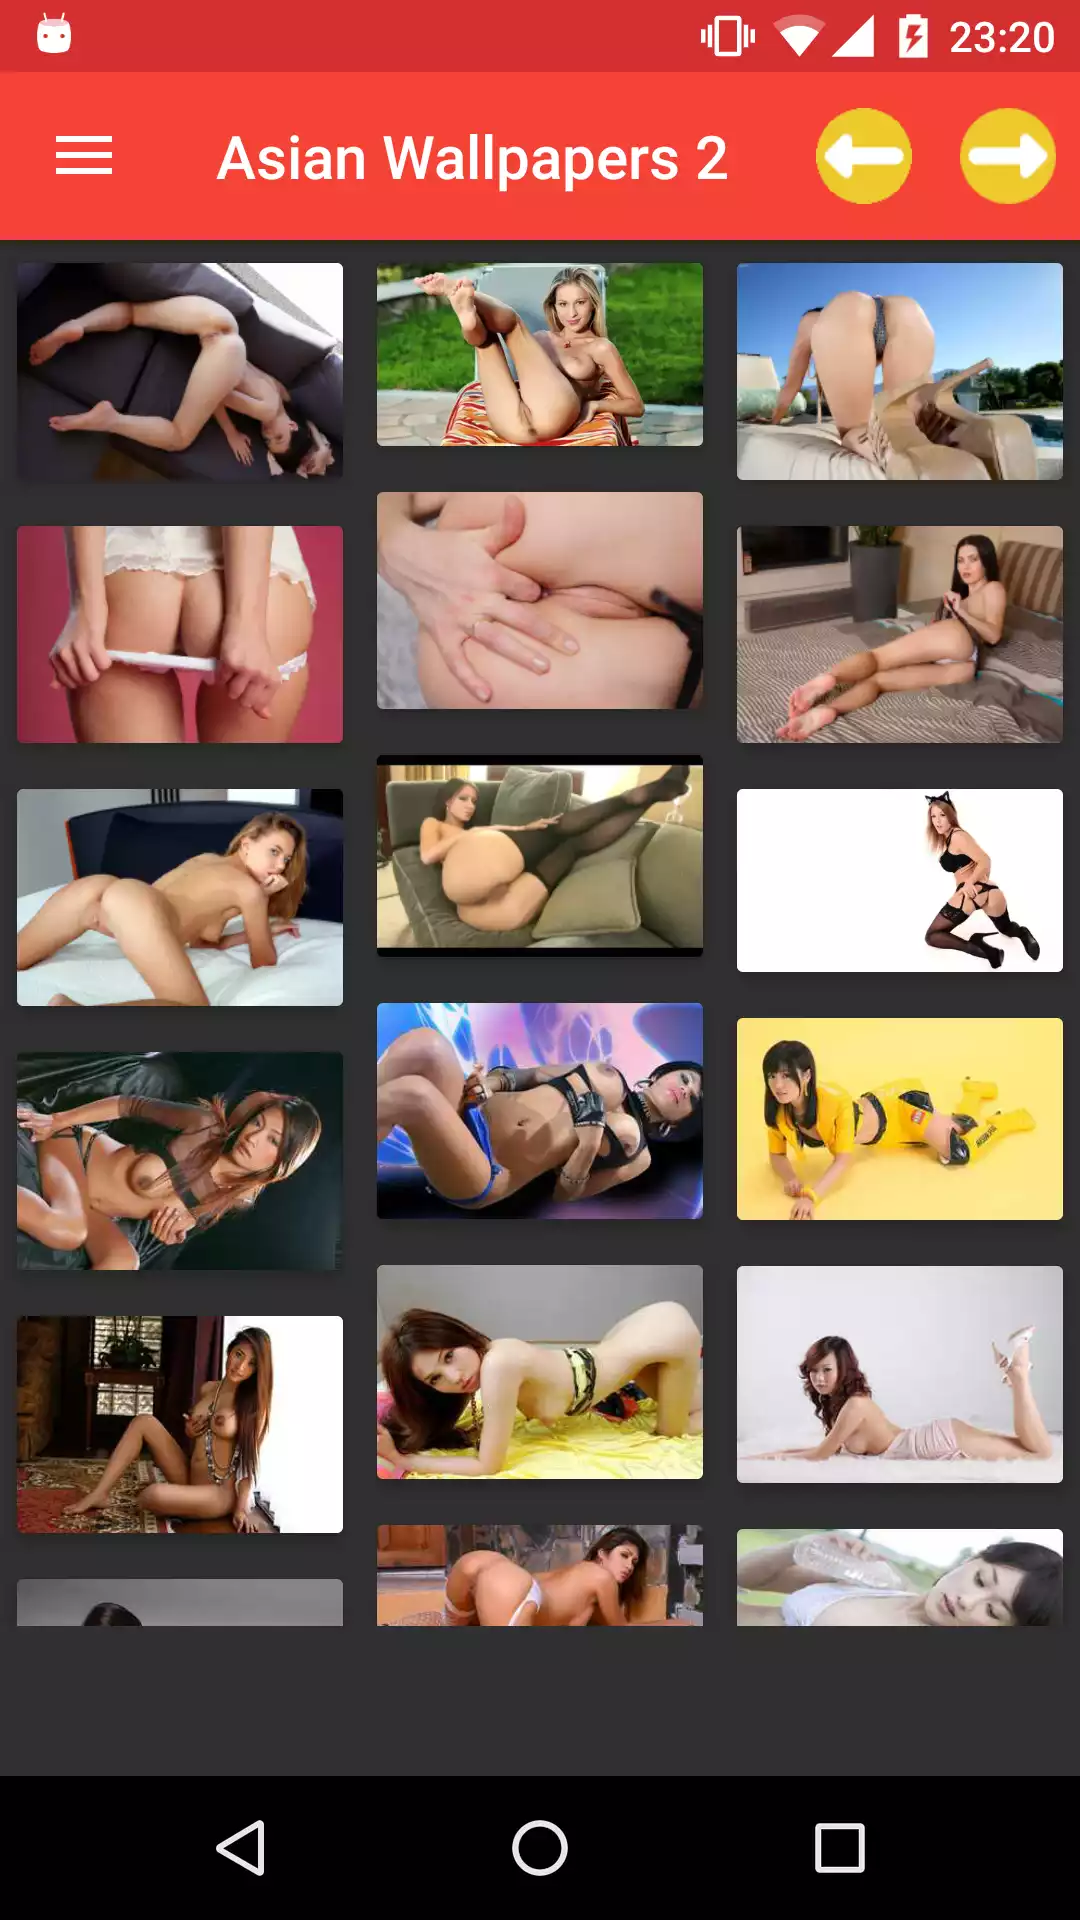 Asian Wallpapers 2 apk,porn,adult,thailand,aplikasi,wallpapers,pic,hentai,korea,girls,picture,futanari,editor,best,asian,japan,apps,sexy,gallery,photo,art,app,pics,download,backgrounds,photos,pictures